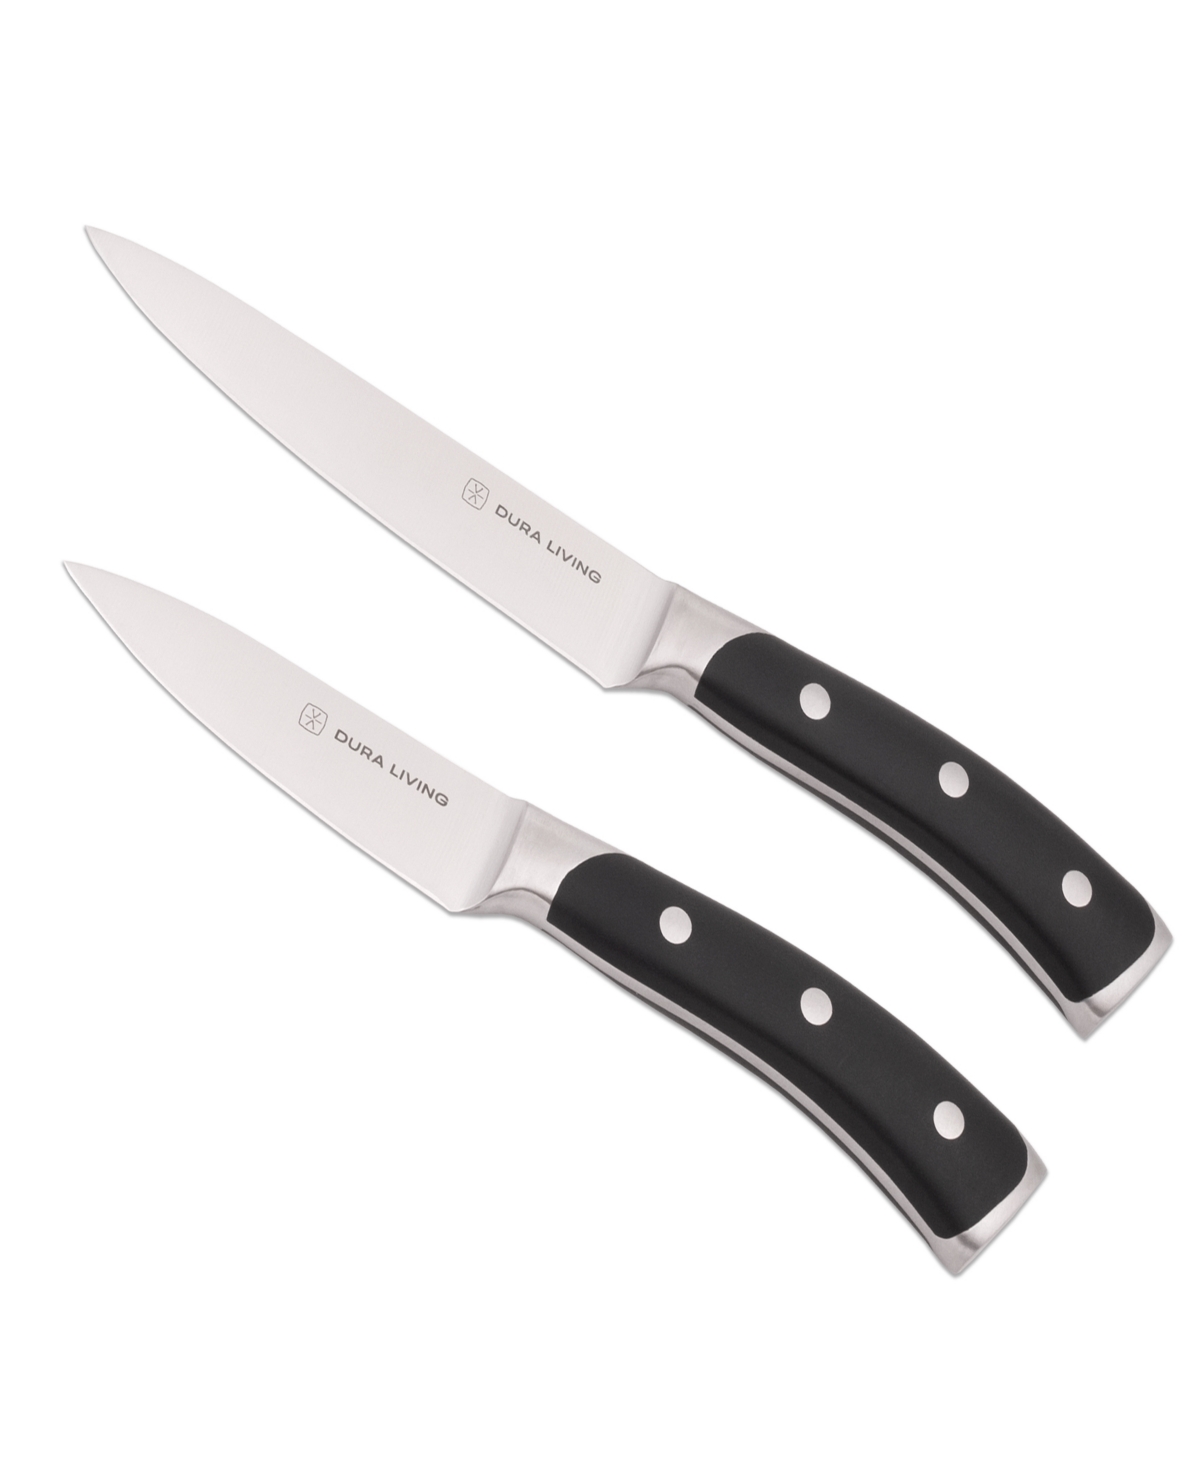 Duraliving 2-piece Professional Kitchen Knife Set In Black